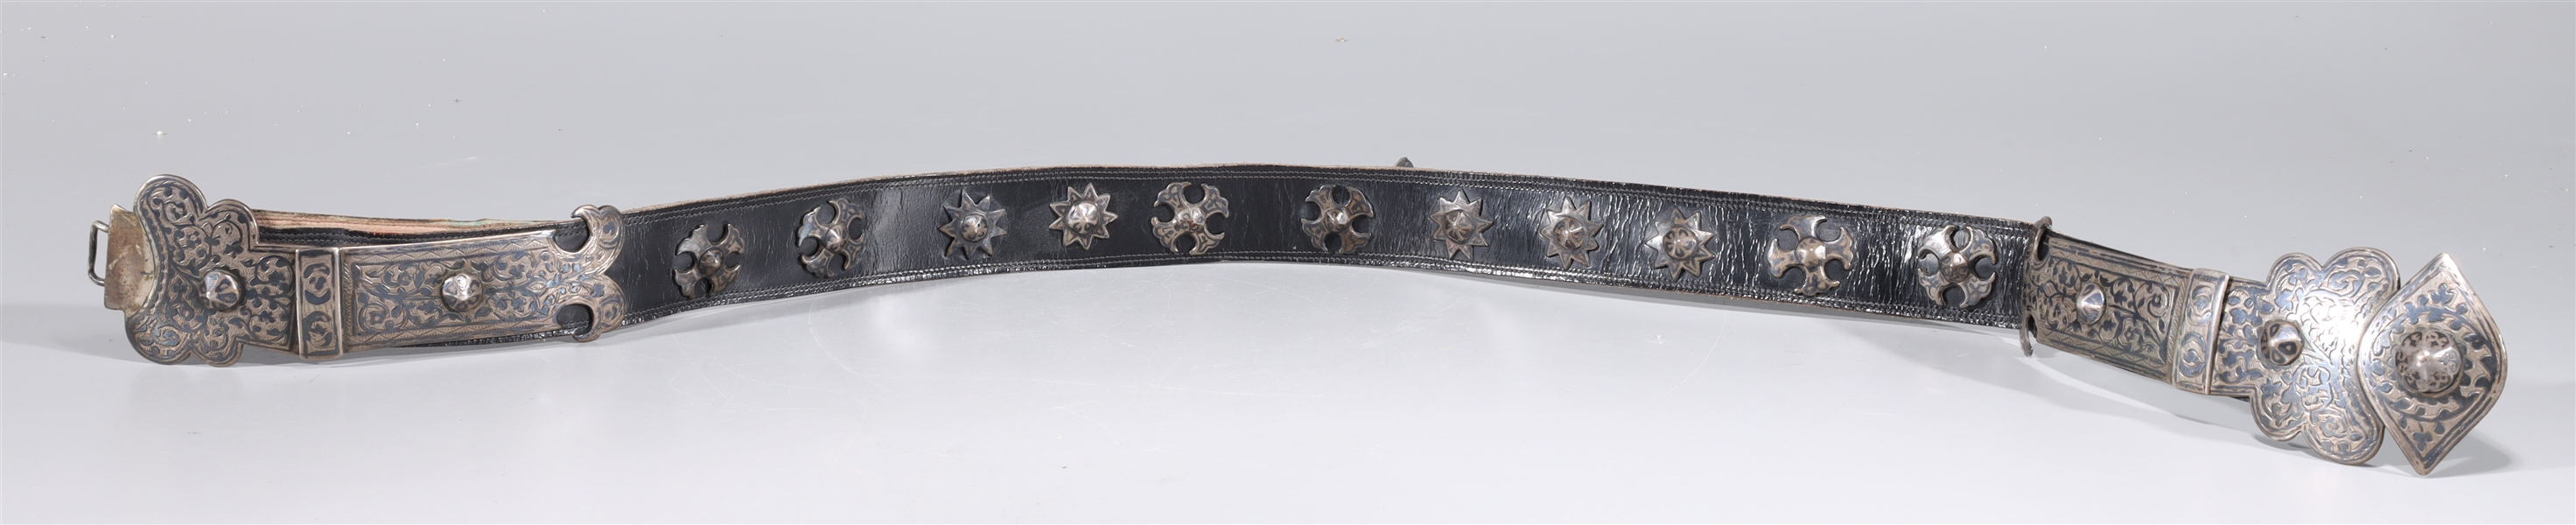 Russian silver niello leather belt  2acf2b